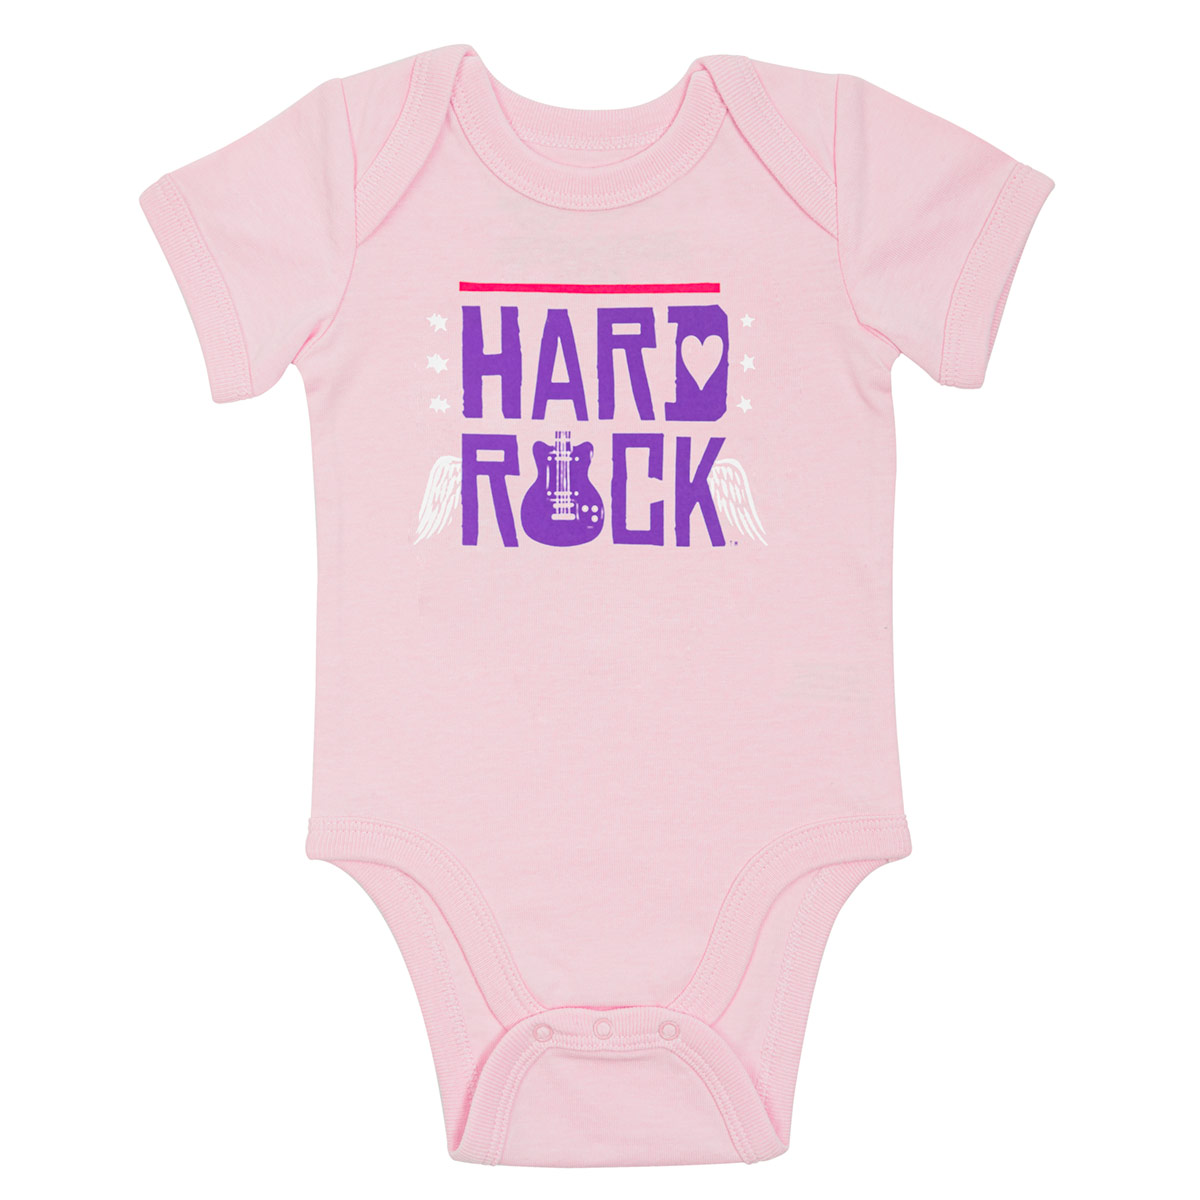 Rock Kids Baby Onesie in Pink with Logo Wings Design image number 5